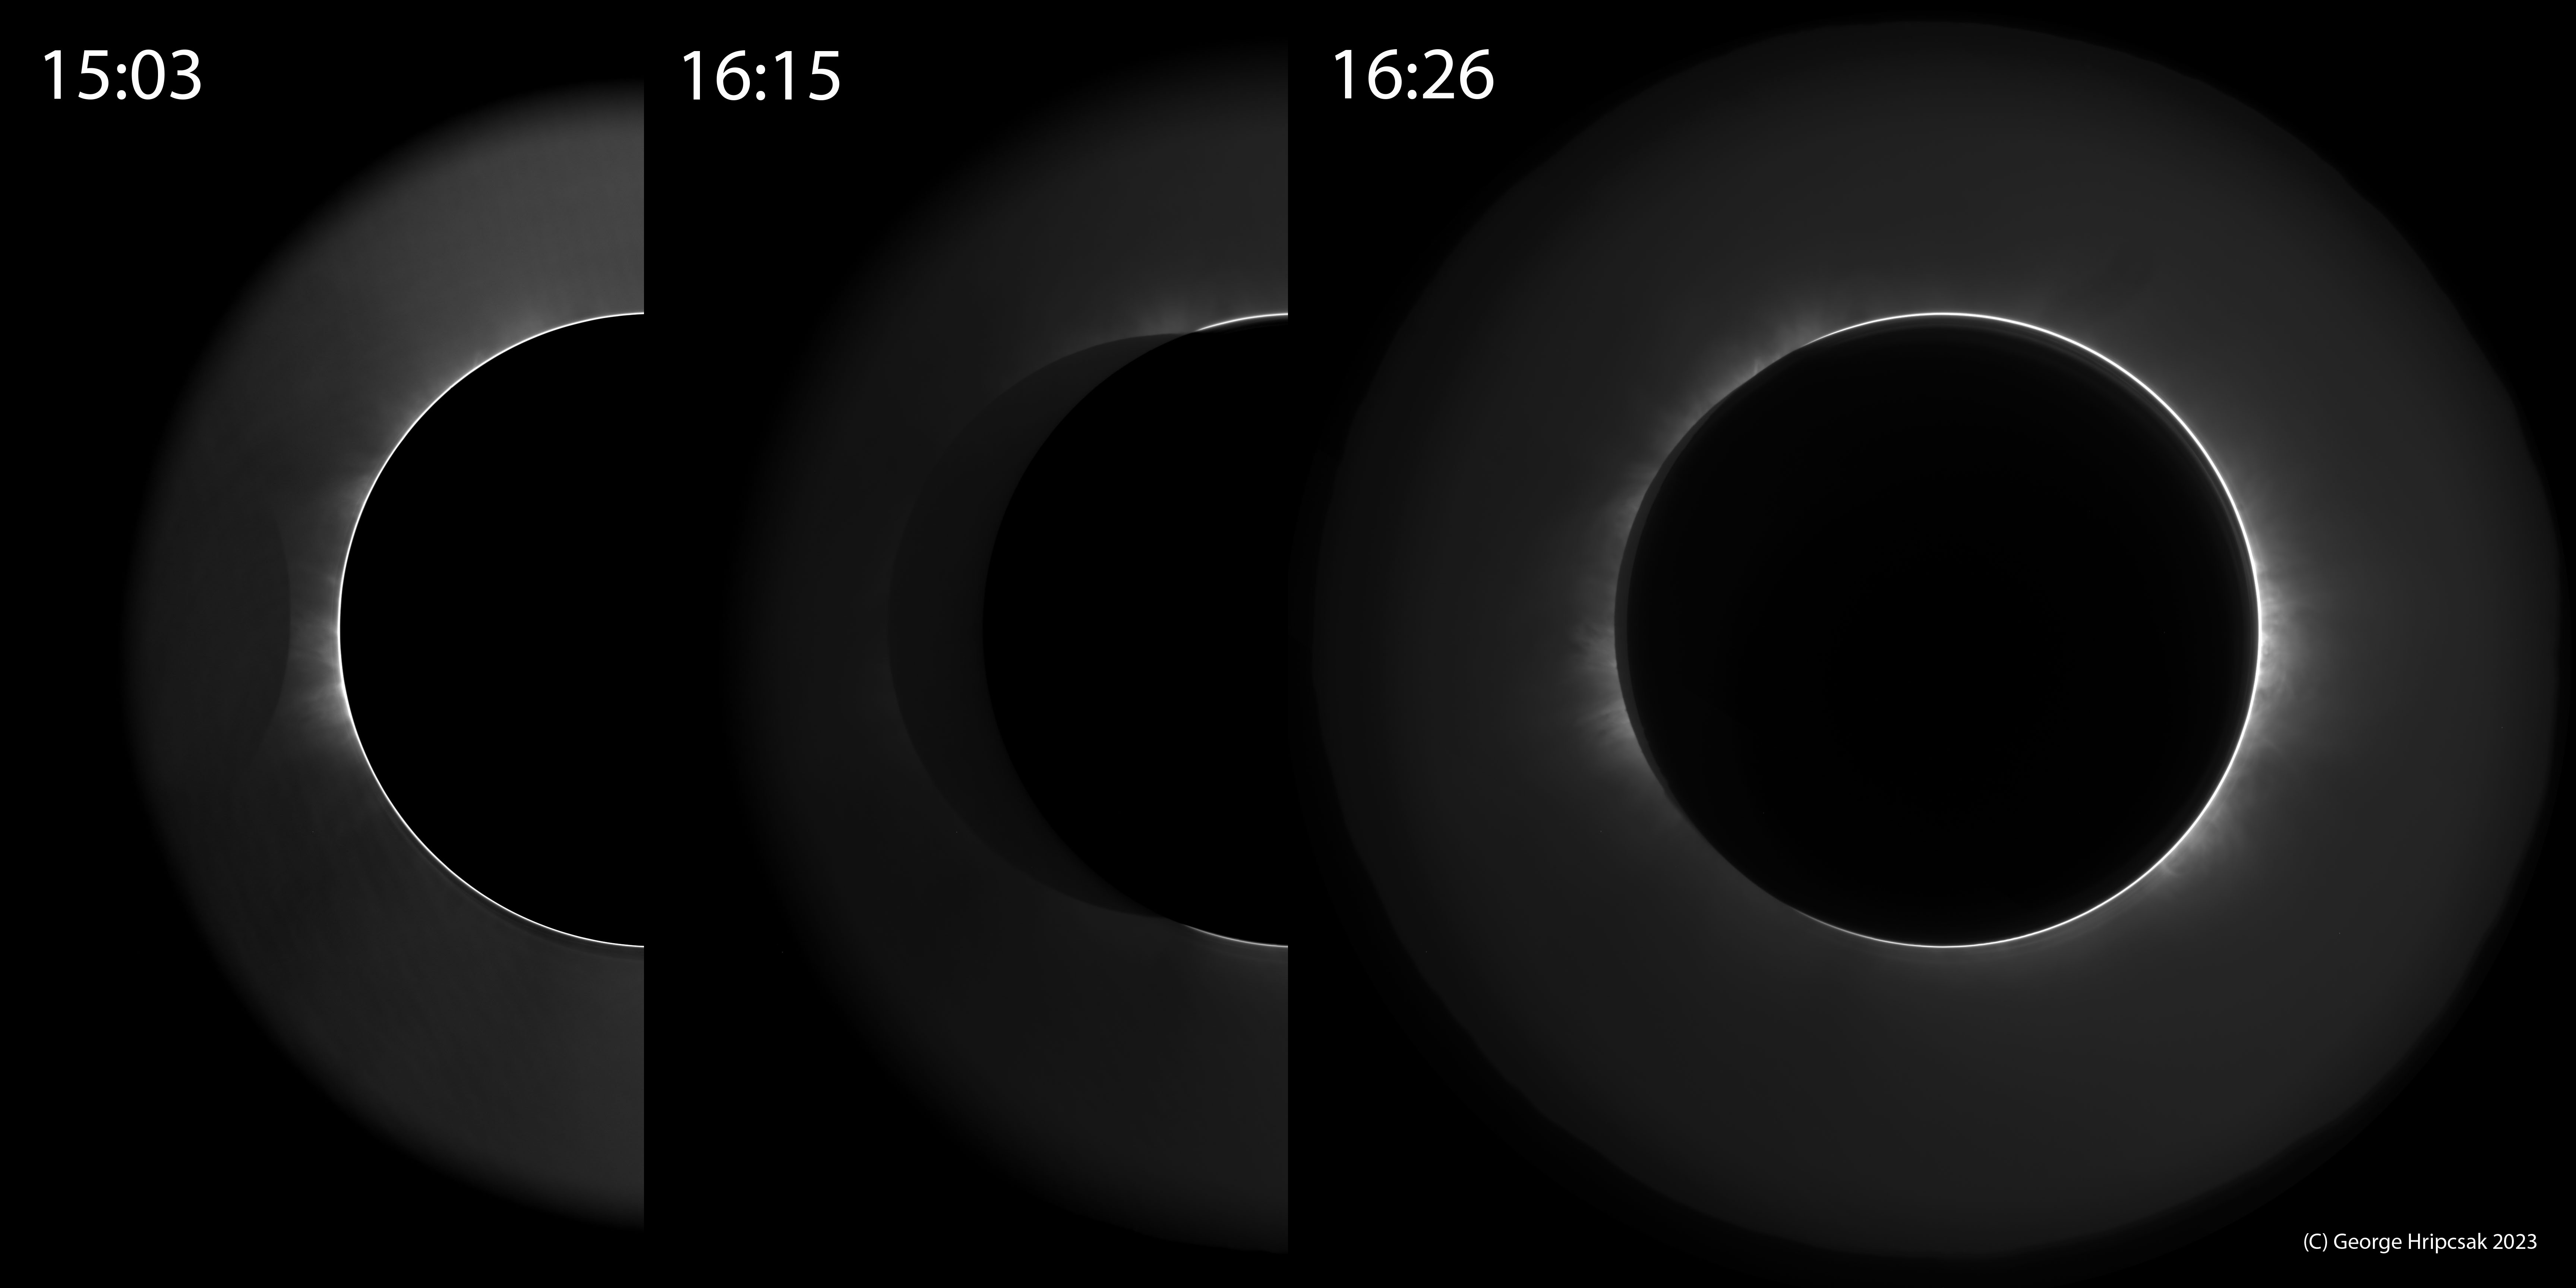 Hripcsak 2023-10-14 eclipse corona montage 3.jpg